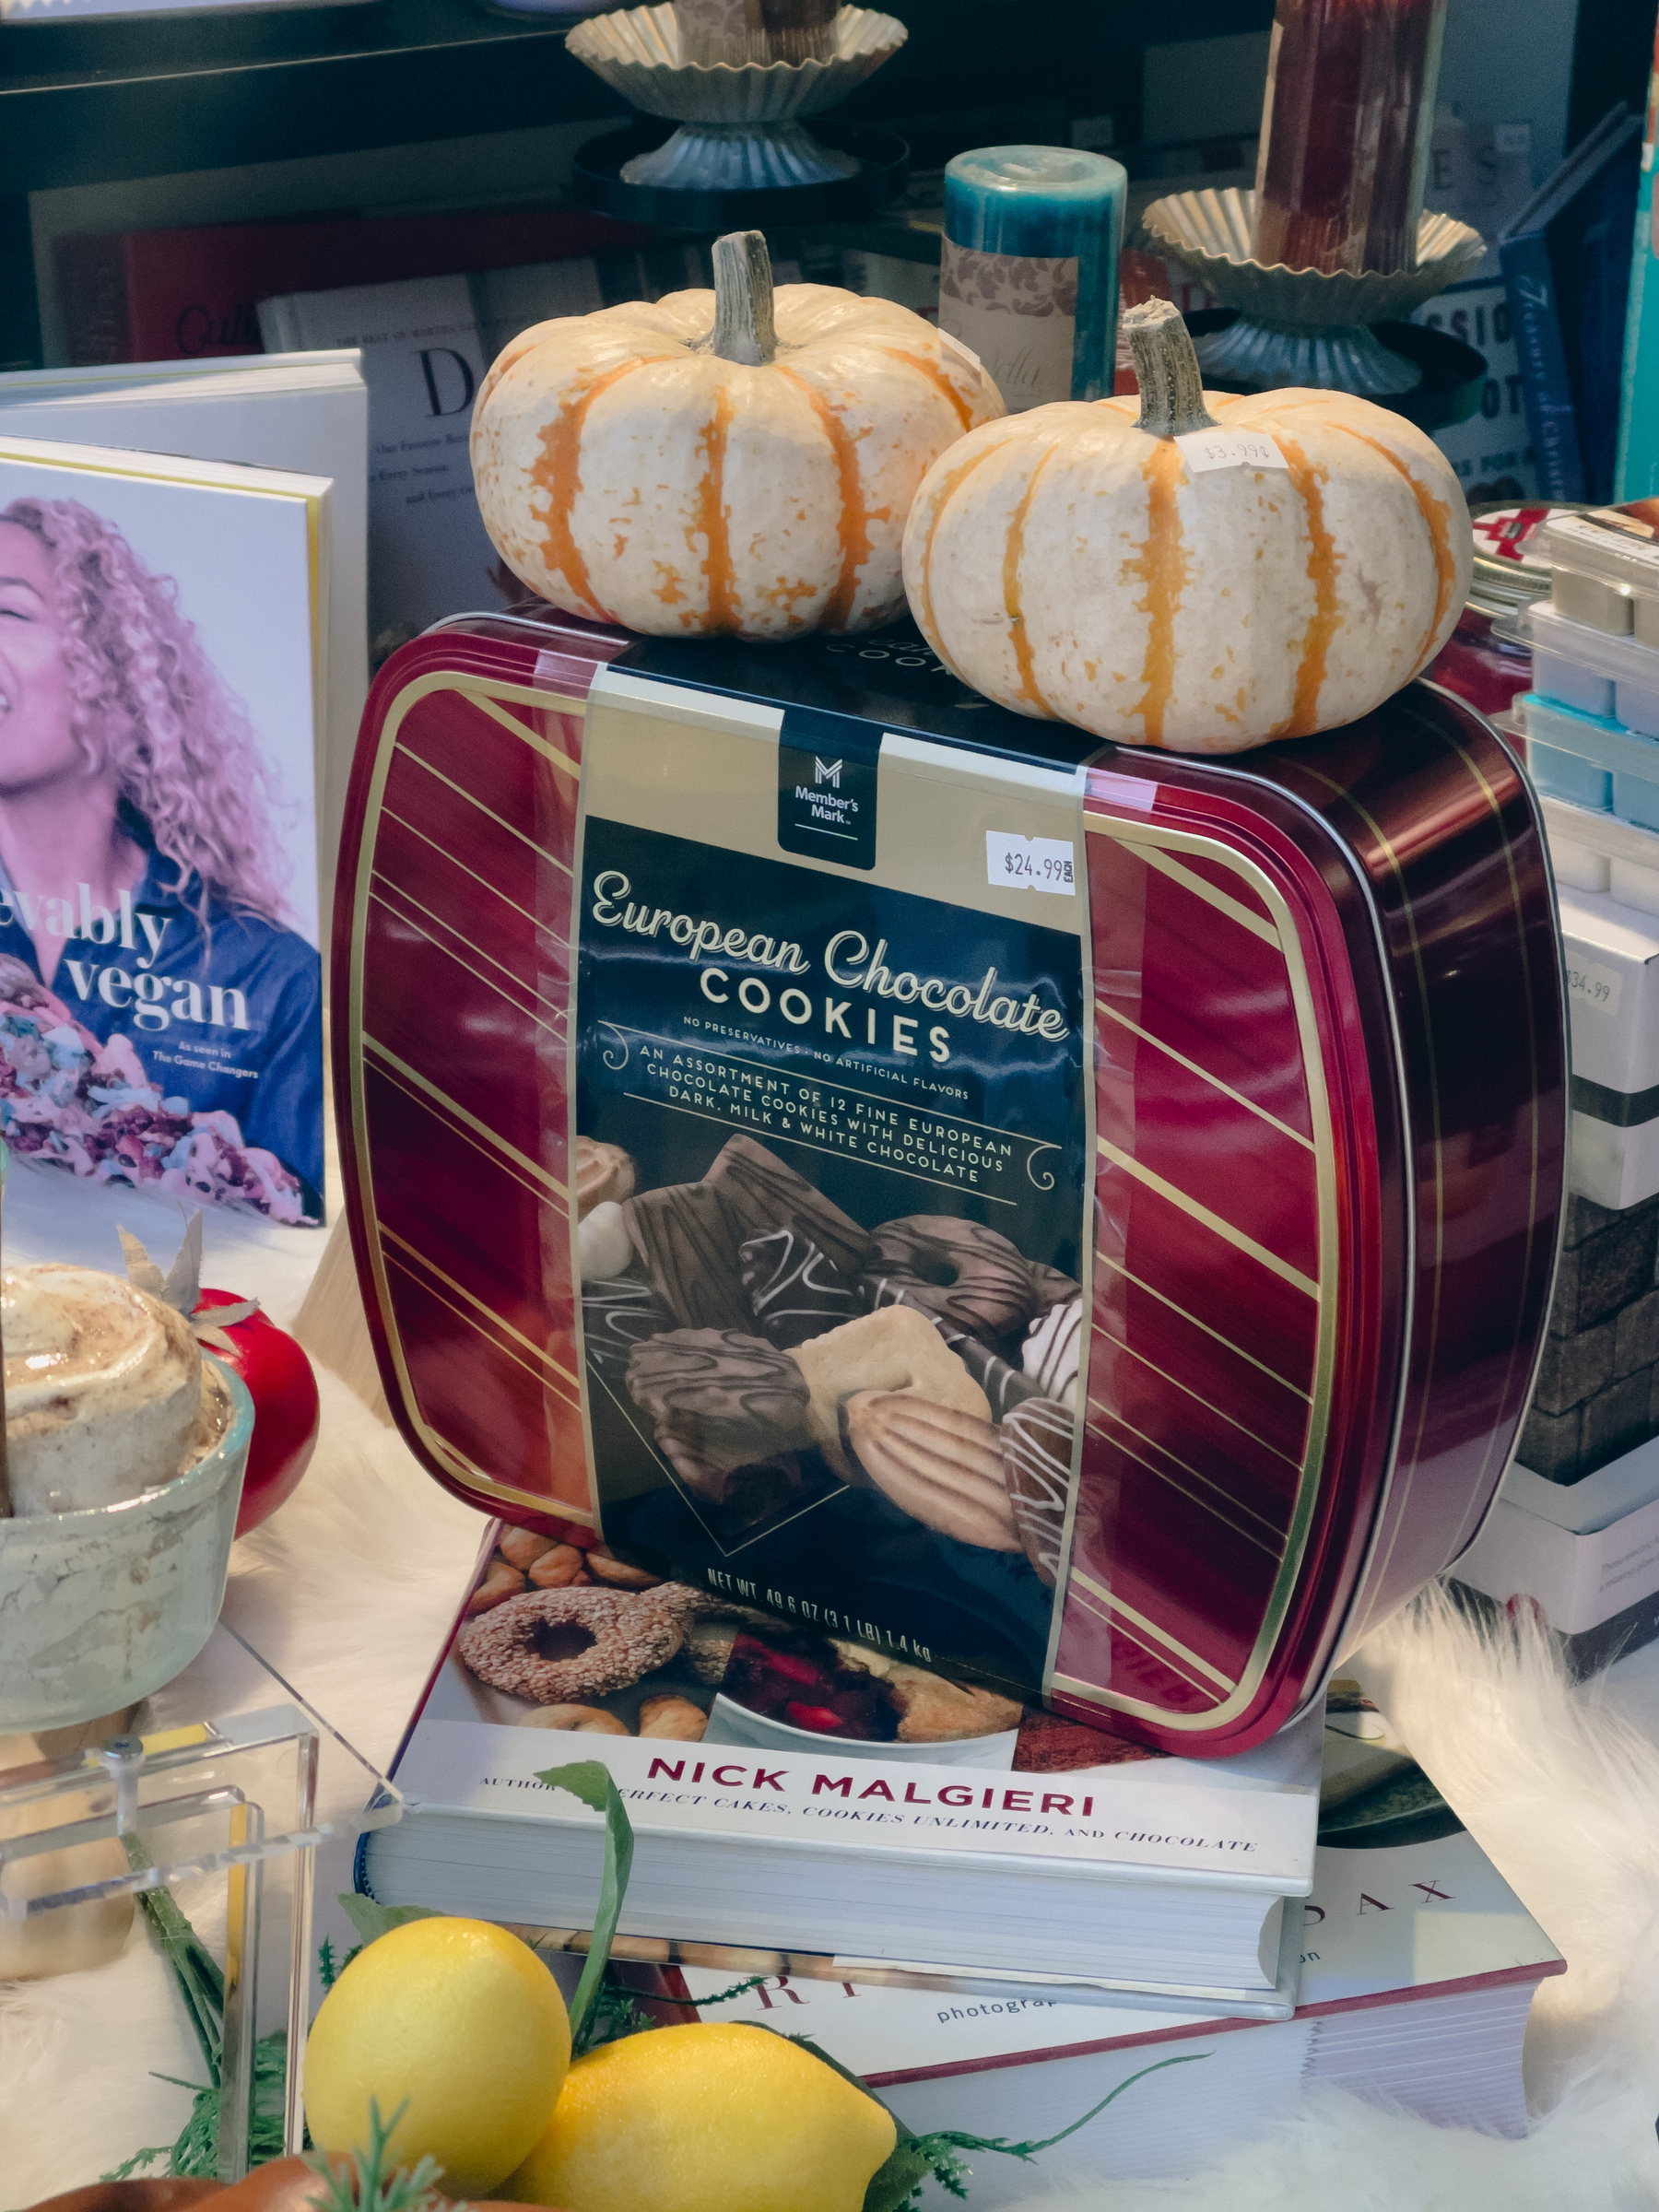 European chocolate cookies tin featured in shop window display.